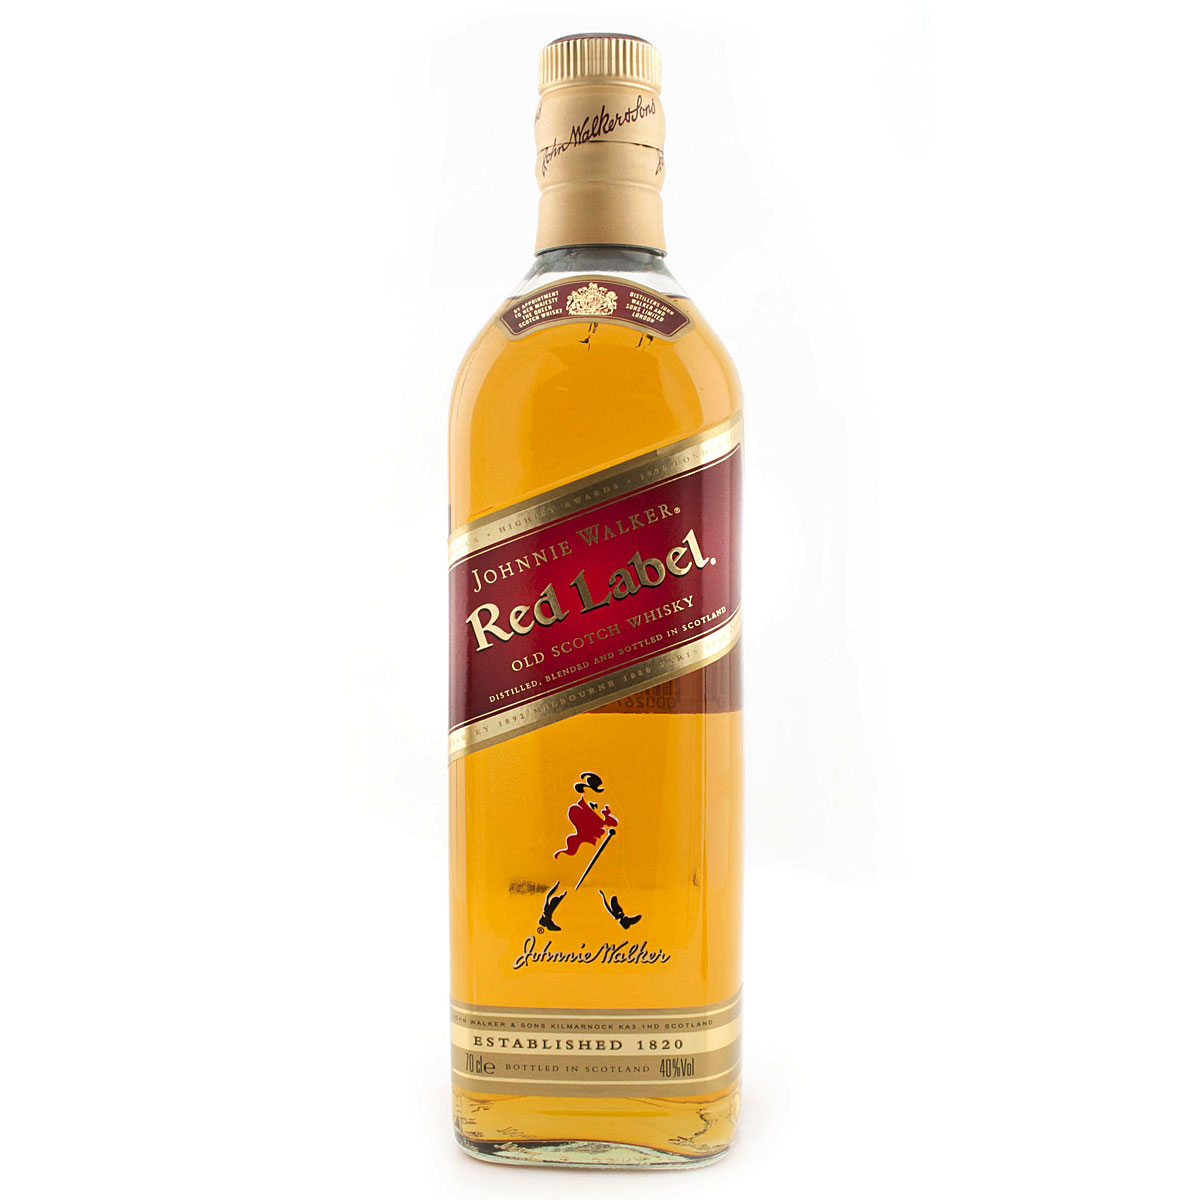 a bottle of johnnie walker red label whisky